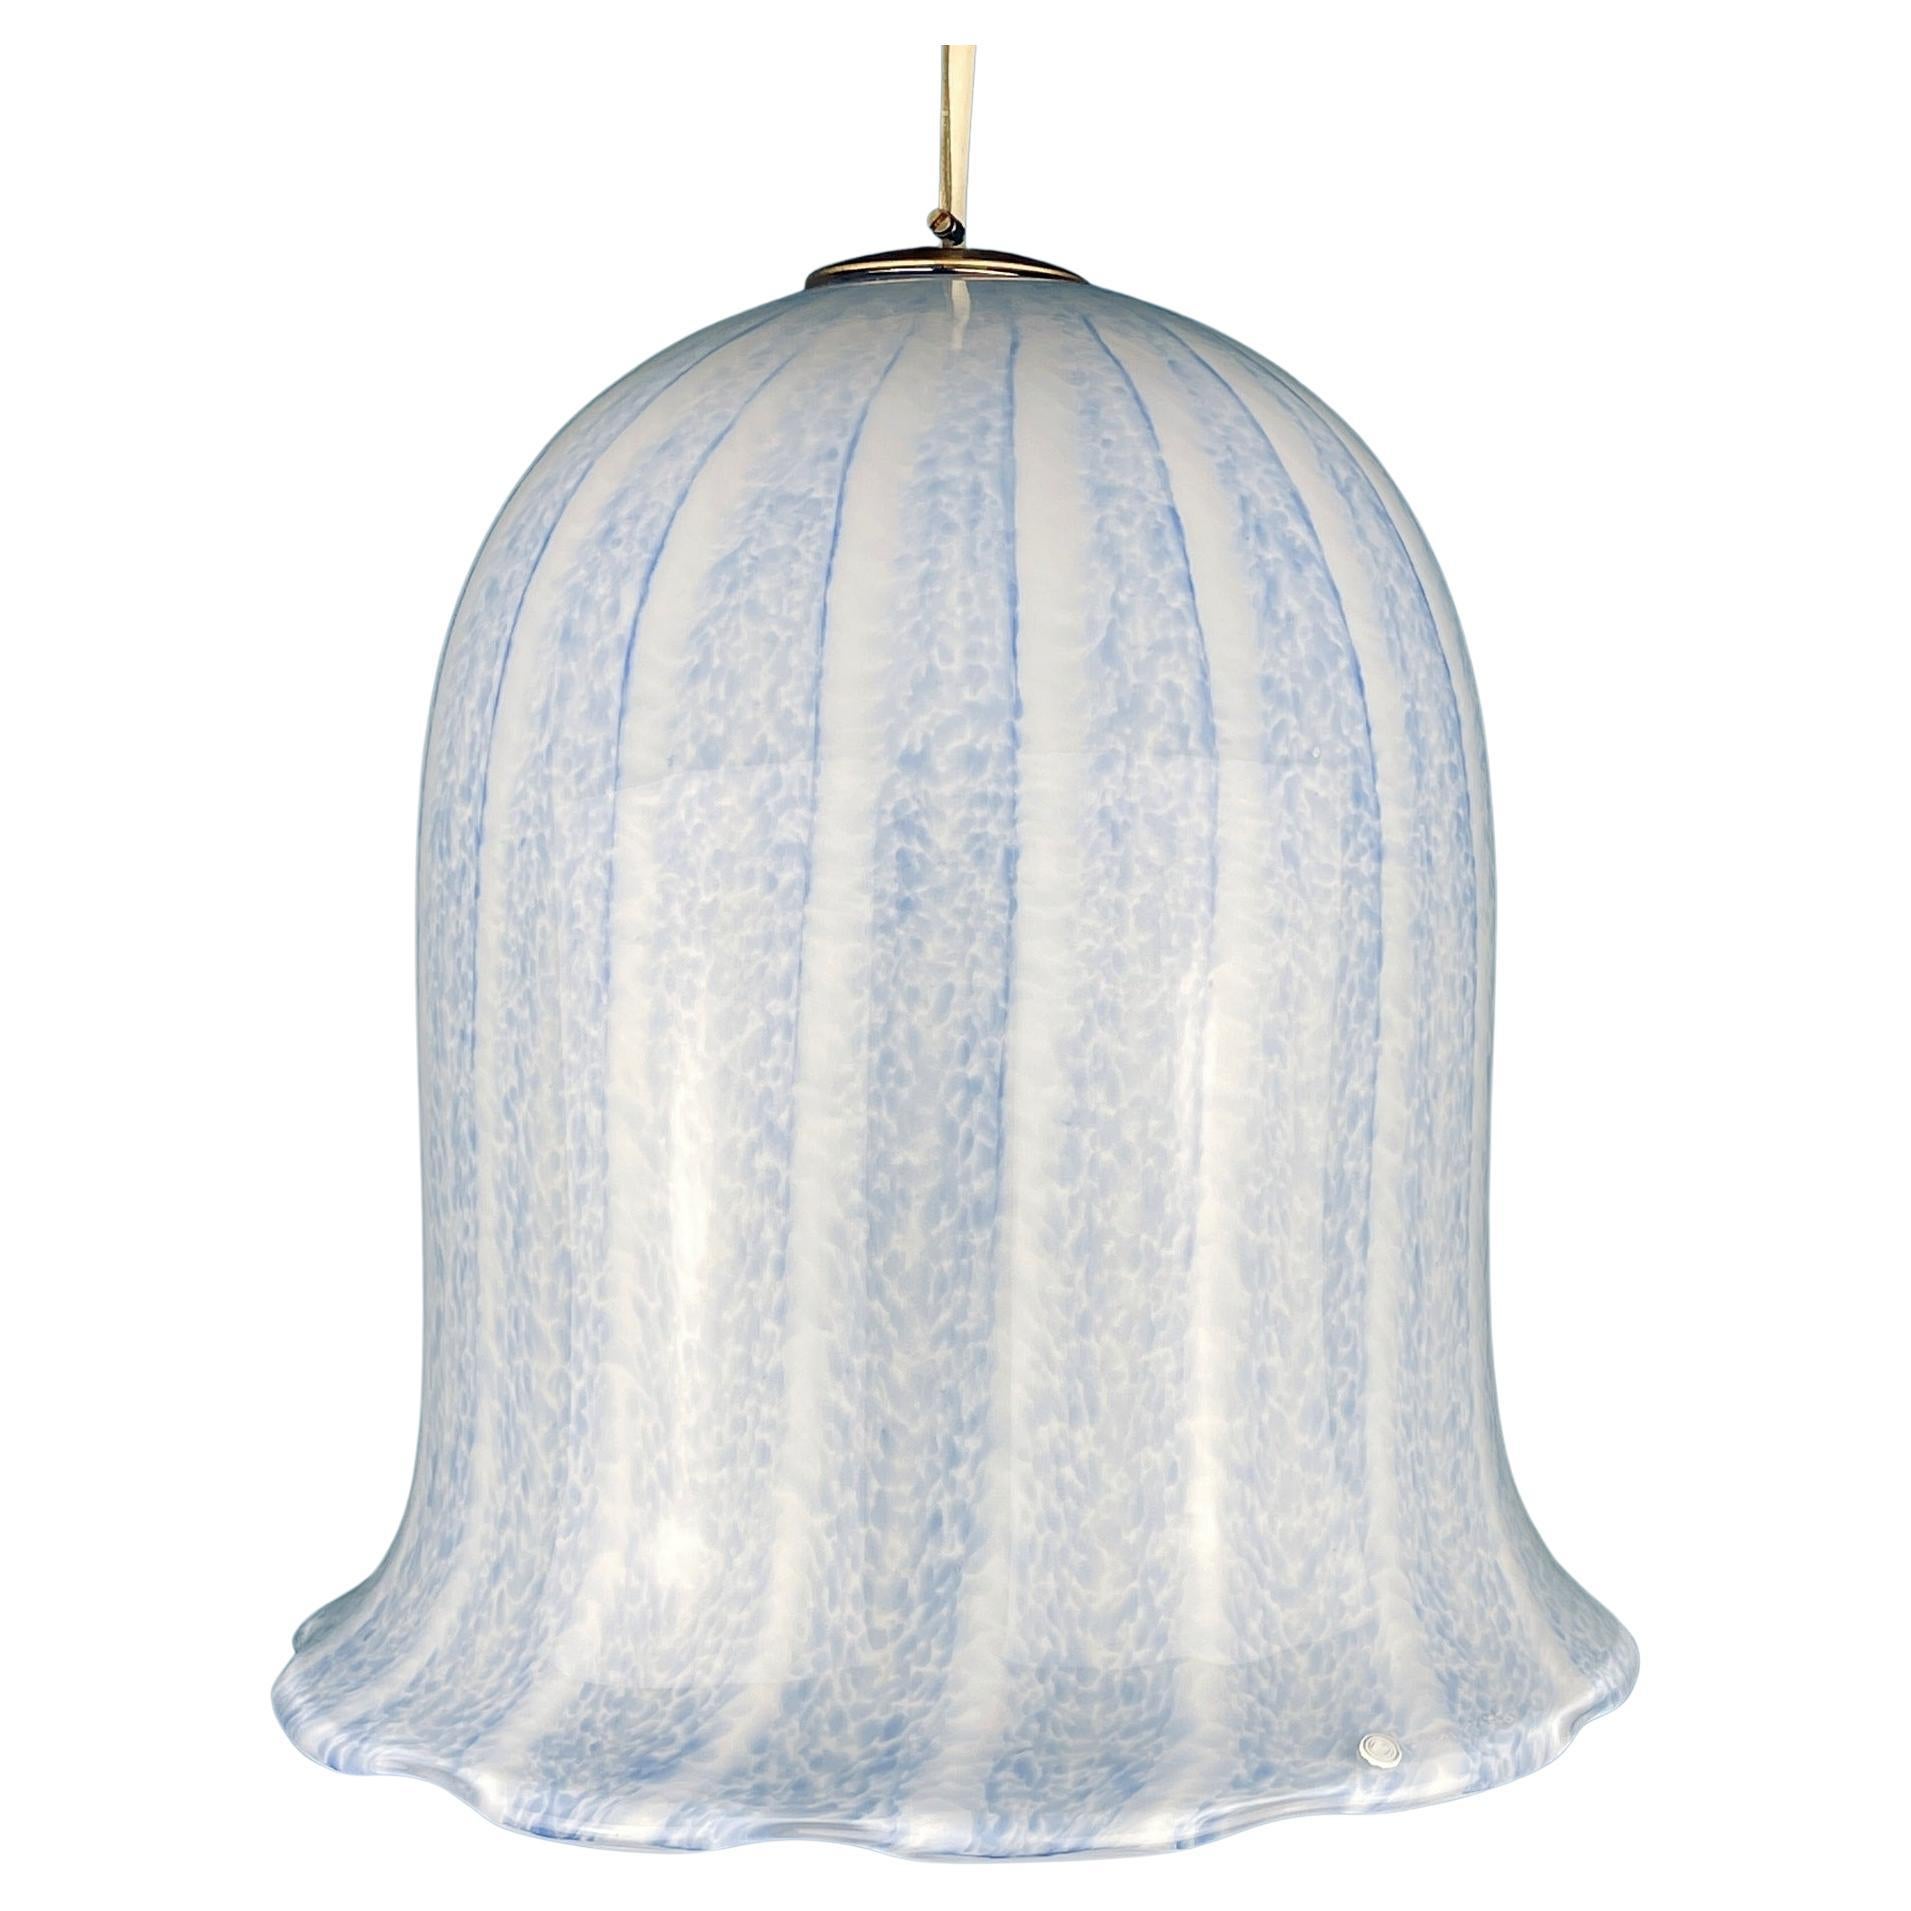 Vintage Blue Murano Pendant Lamp by Manufacture "La Murrina" Italy 1980s